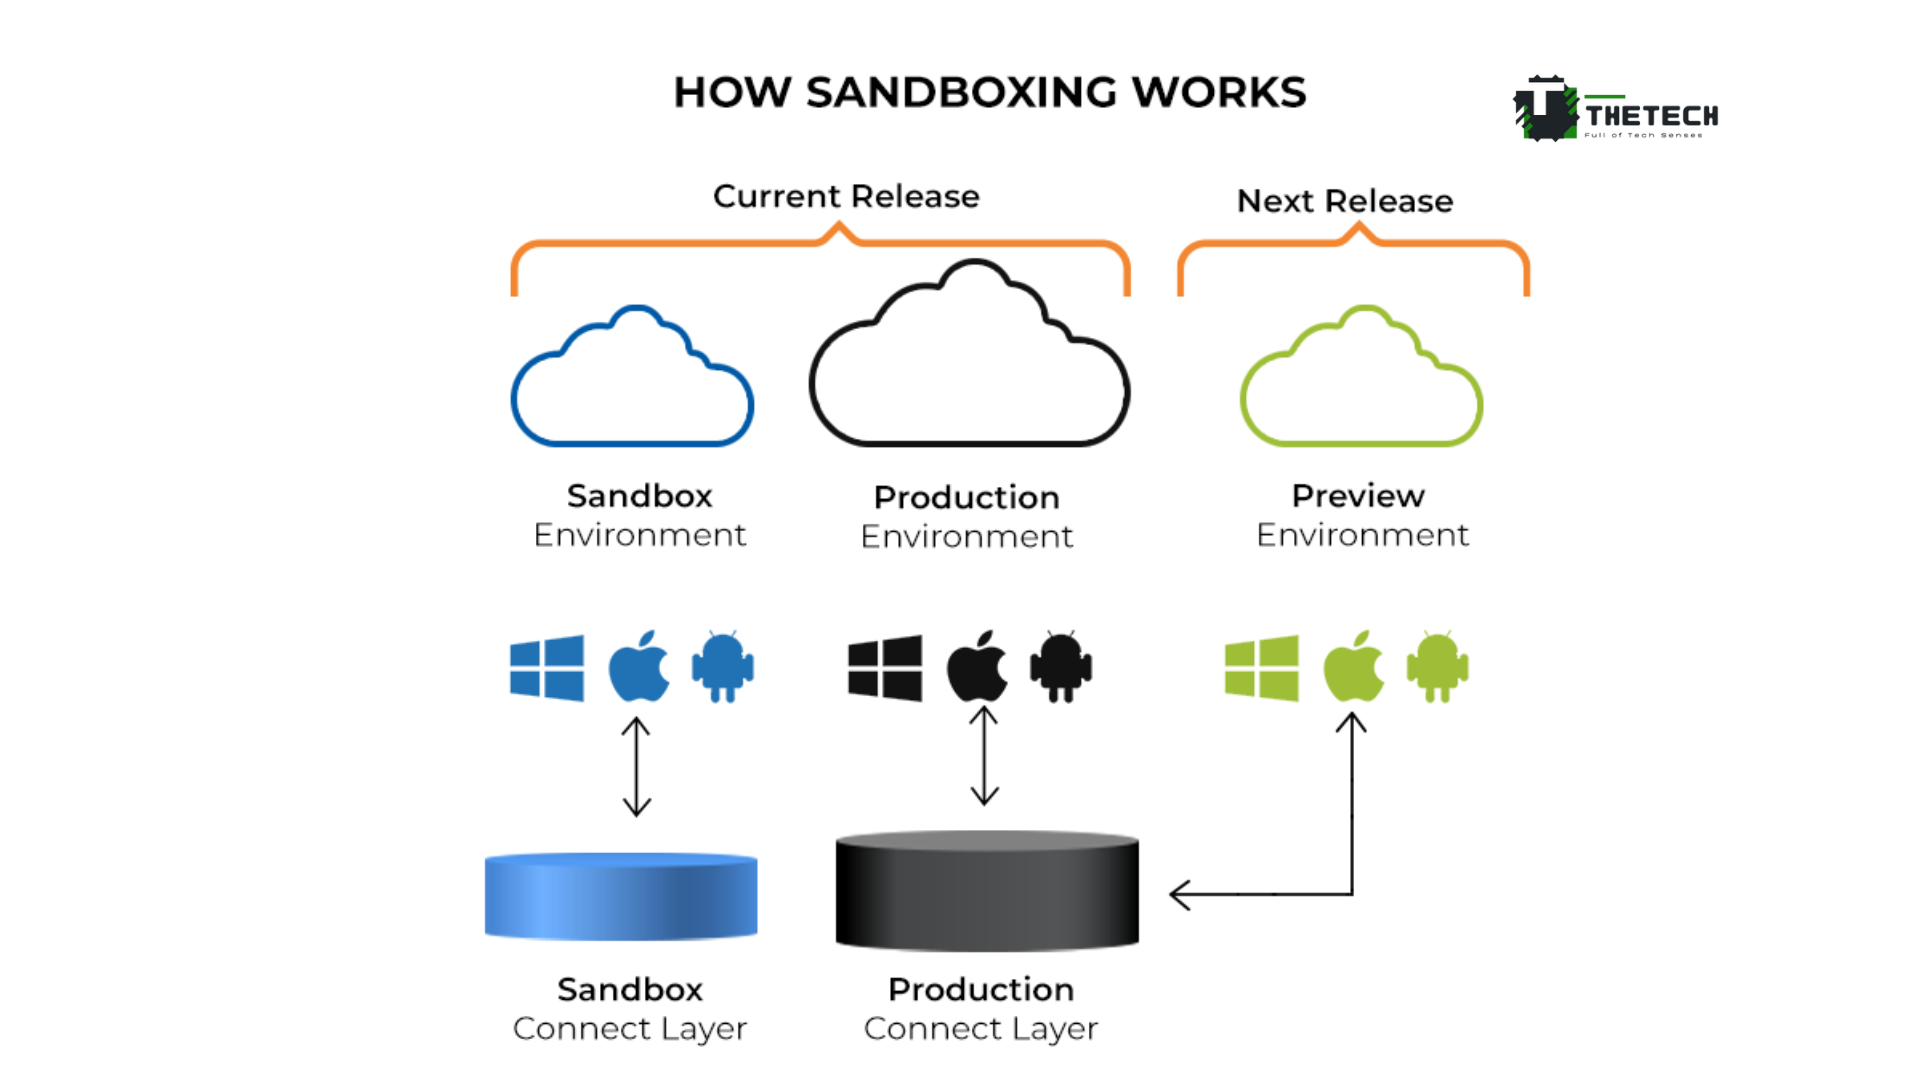 Network Sandbox